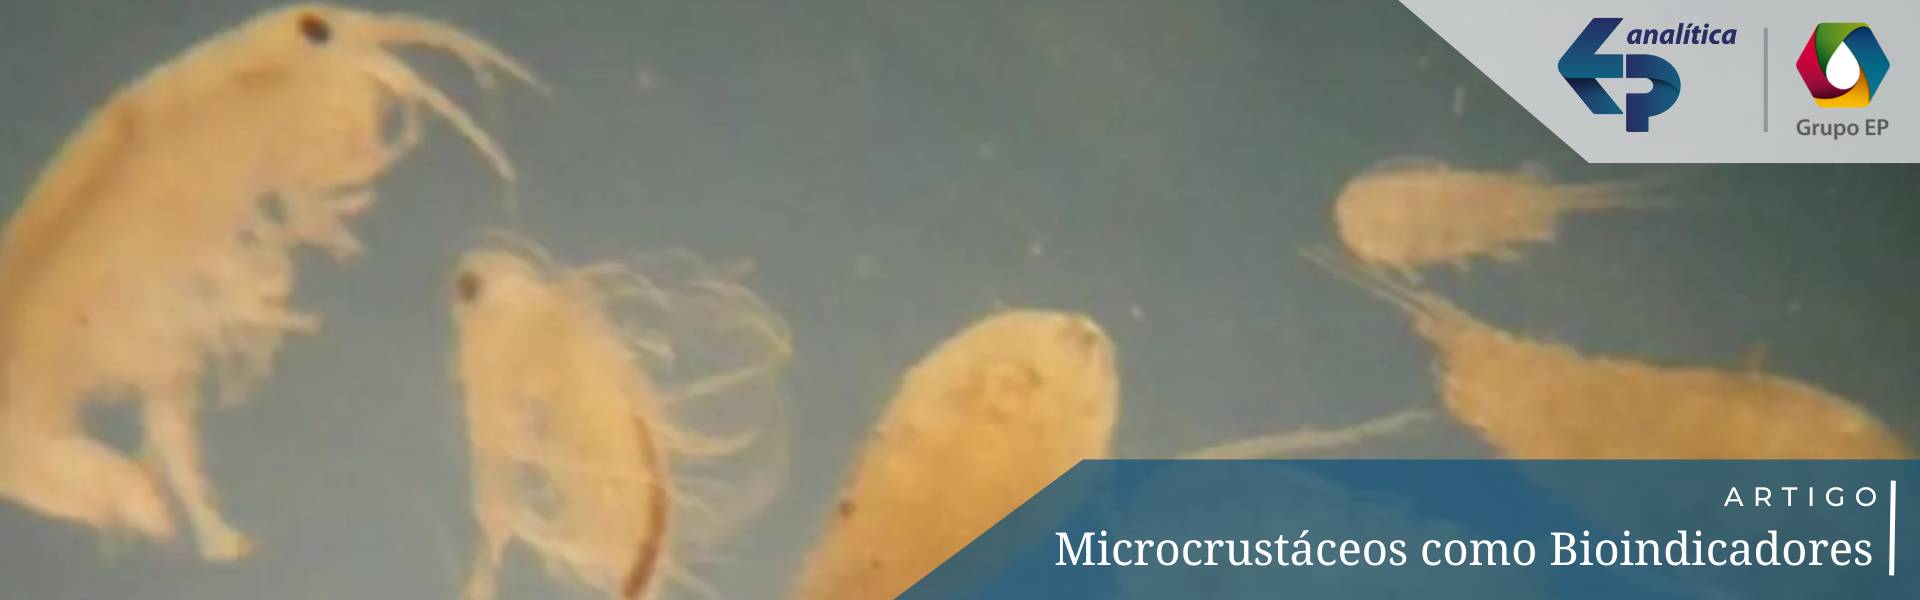 Banner microcrustaceans as bioindicators